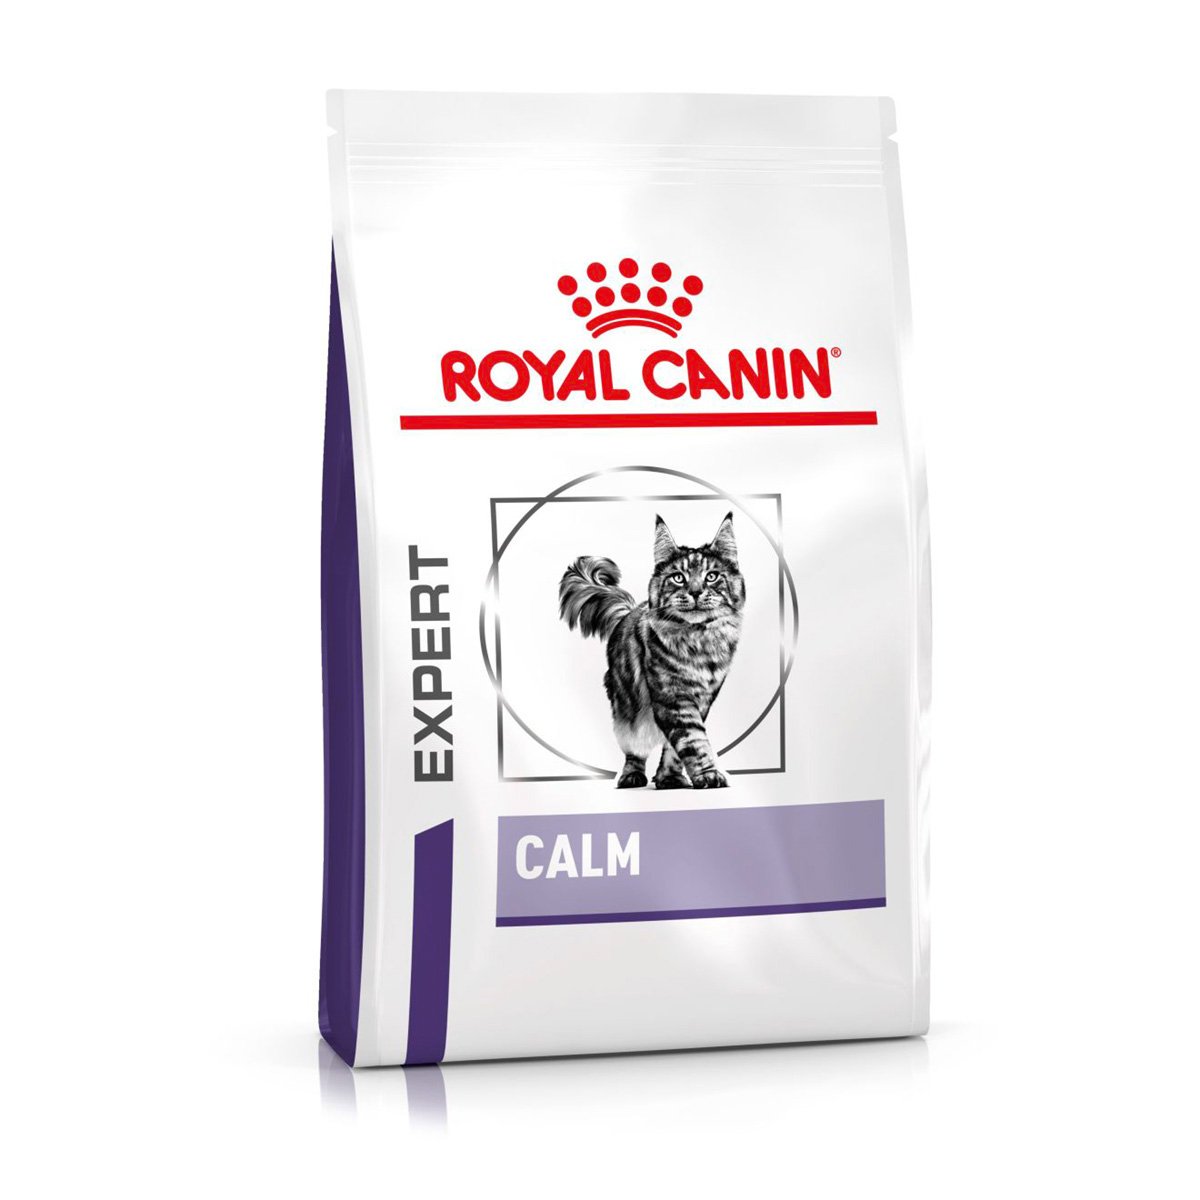 ROYAL CANIN® Expert CALM Trockenfutter für Katzen 2kg von Royal Canin